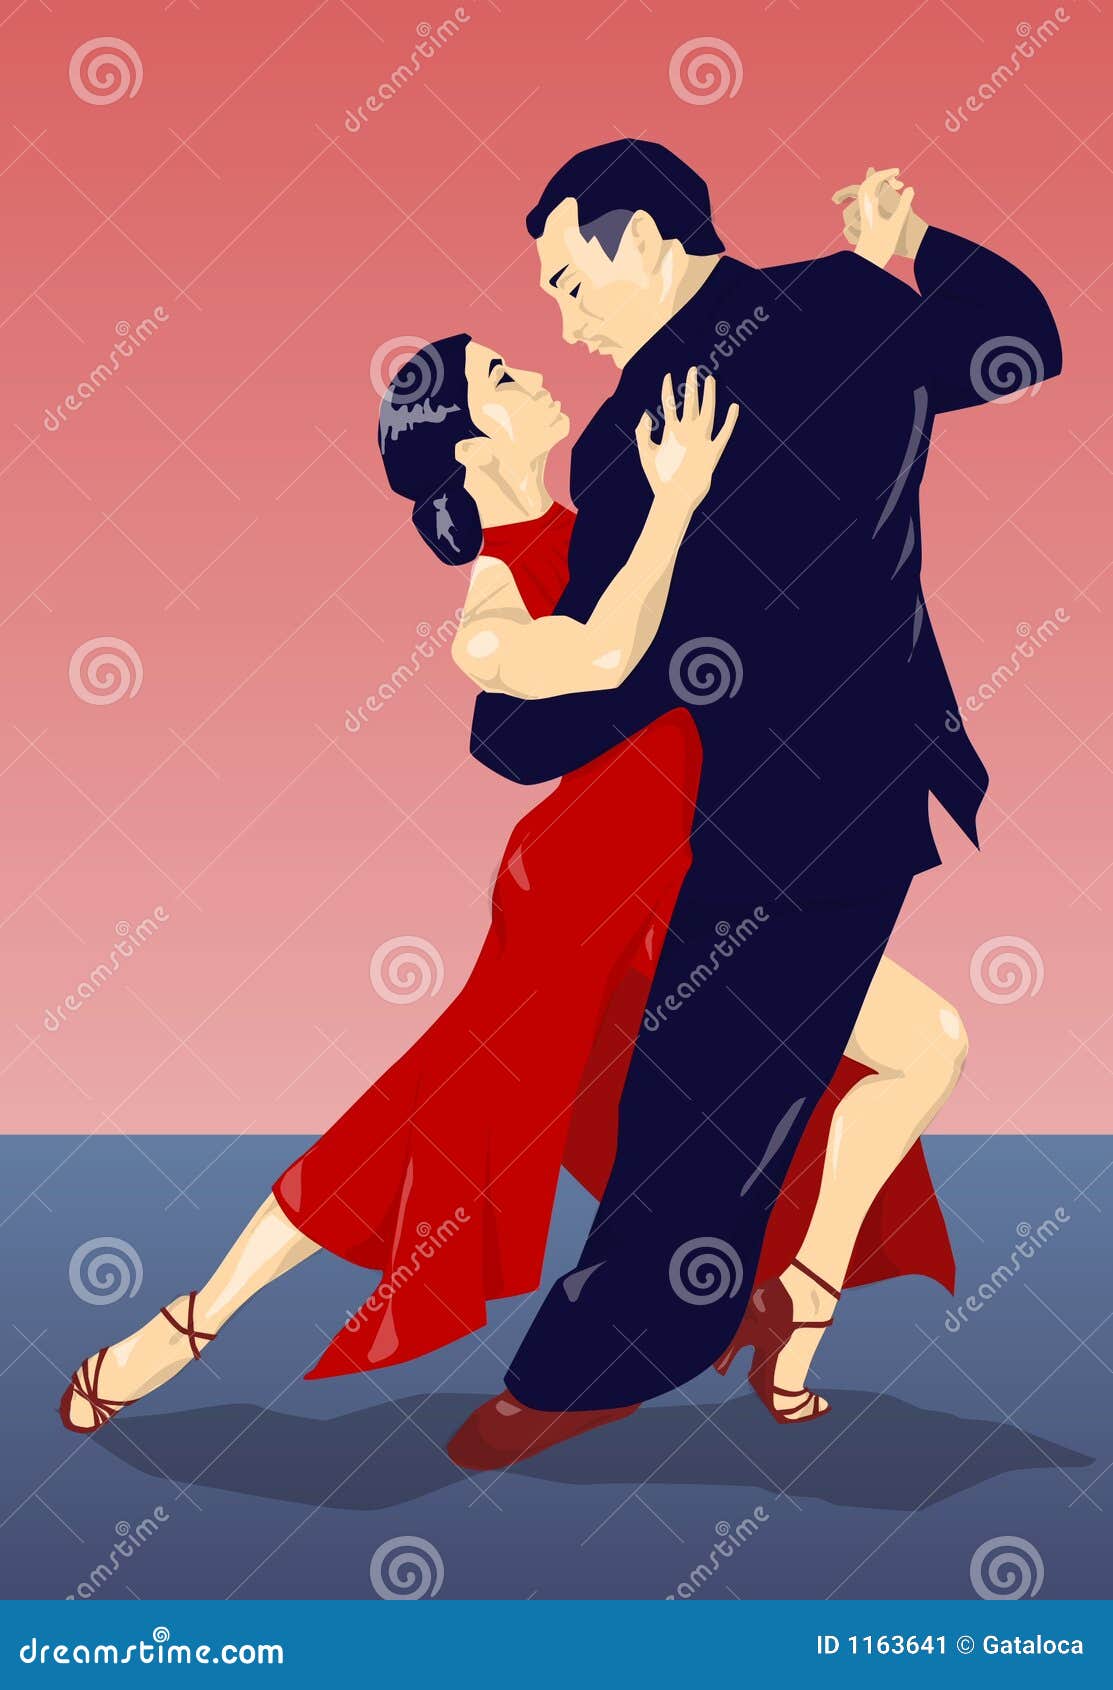 clipart tango argentino - photo #45